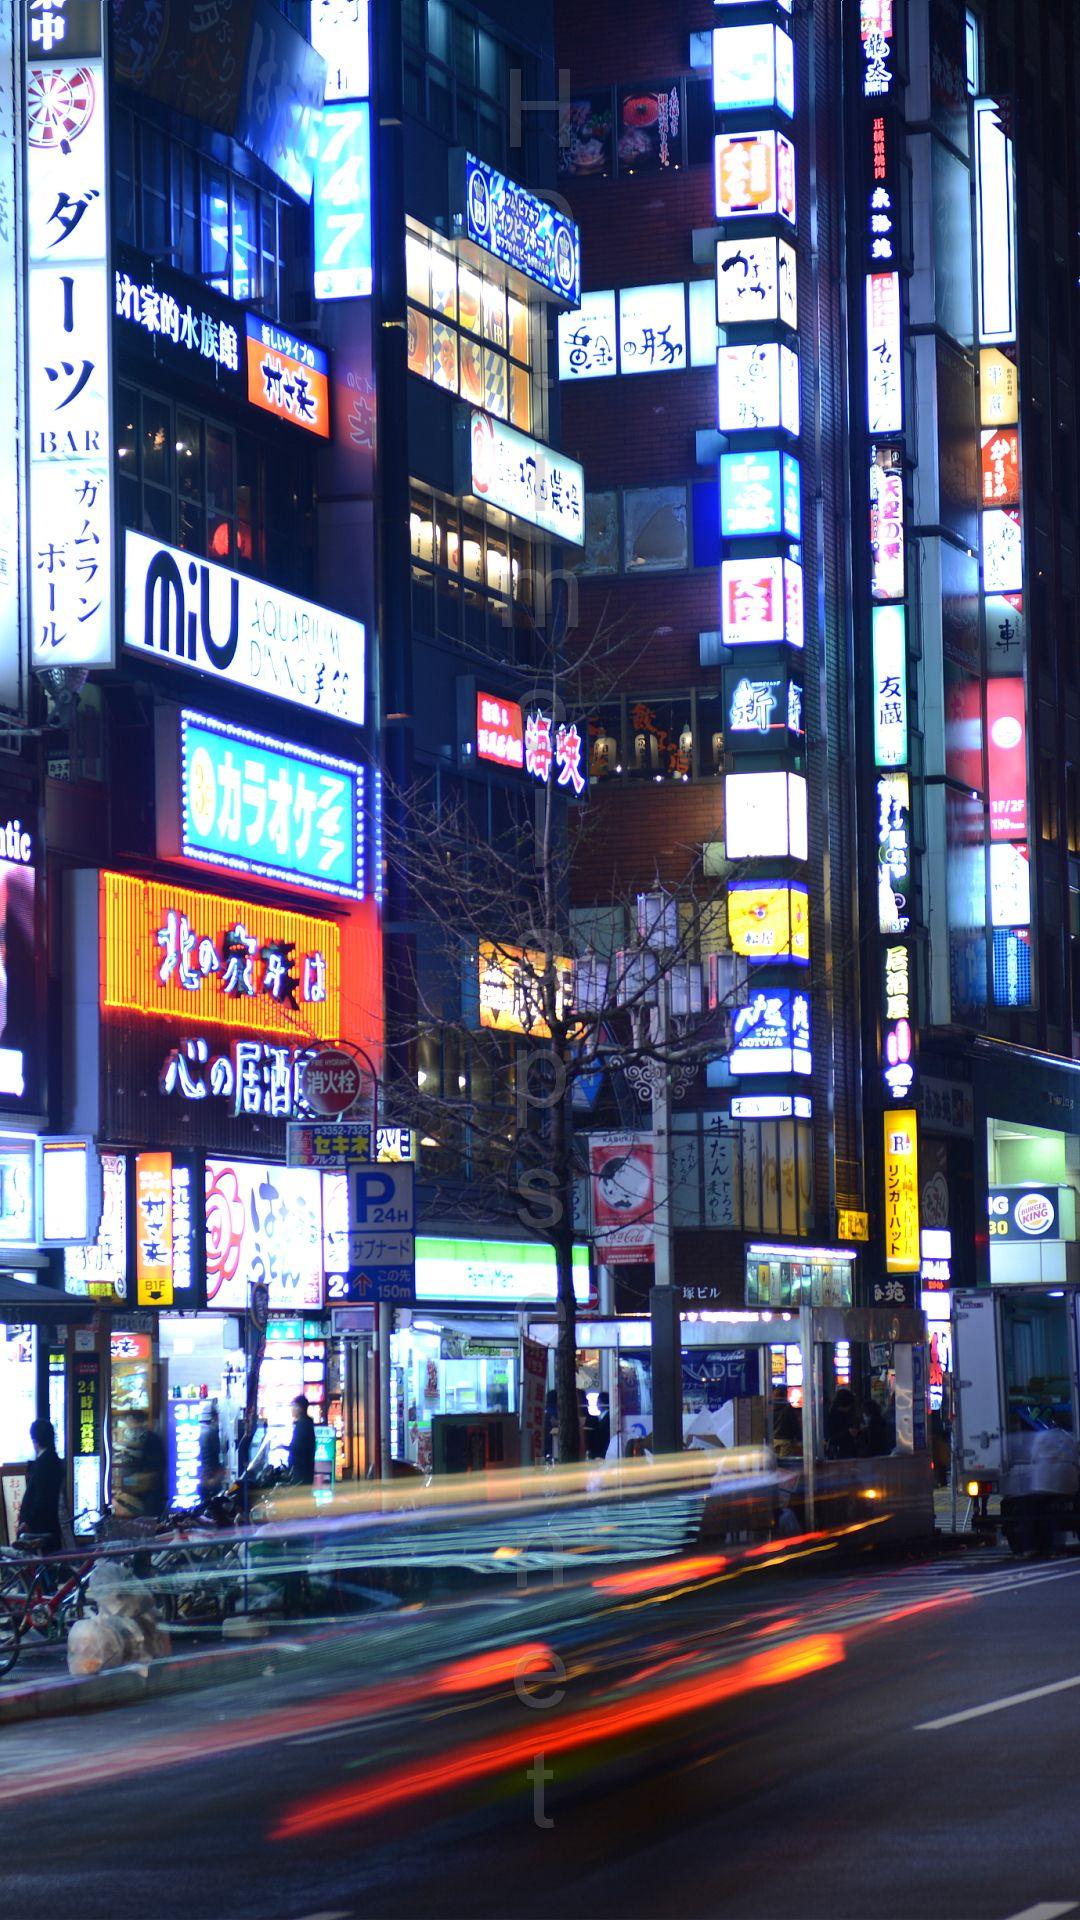 Tokyo Street iPhone Wallpapers - Top Free Tokyo Street iPhone ...